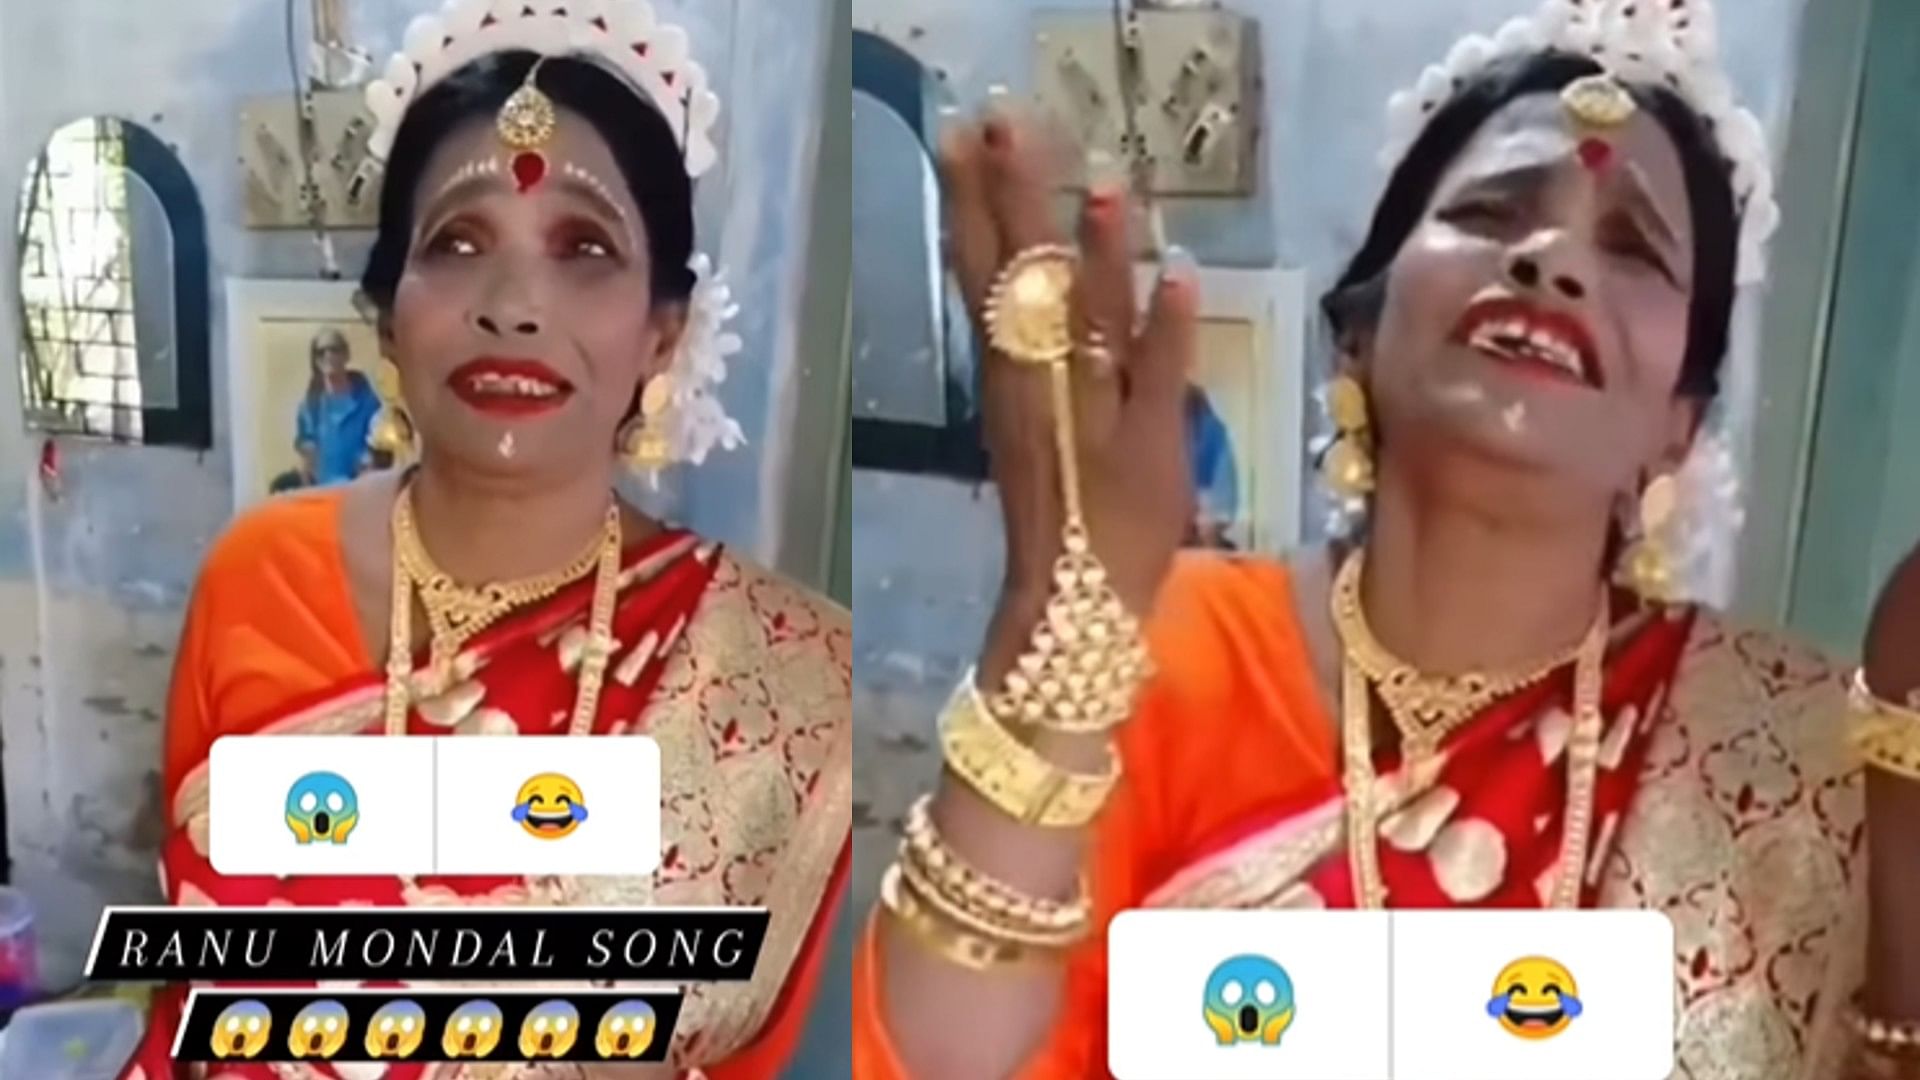 Ranu Mandal Viral Video: Ranu Mandal sang kachcha badam song as a bride